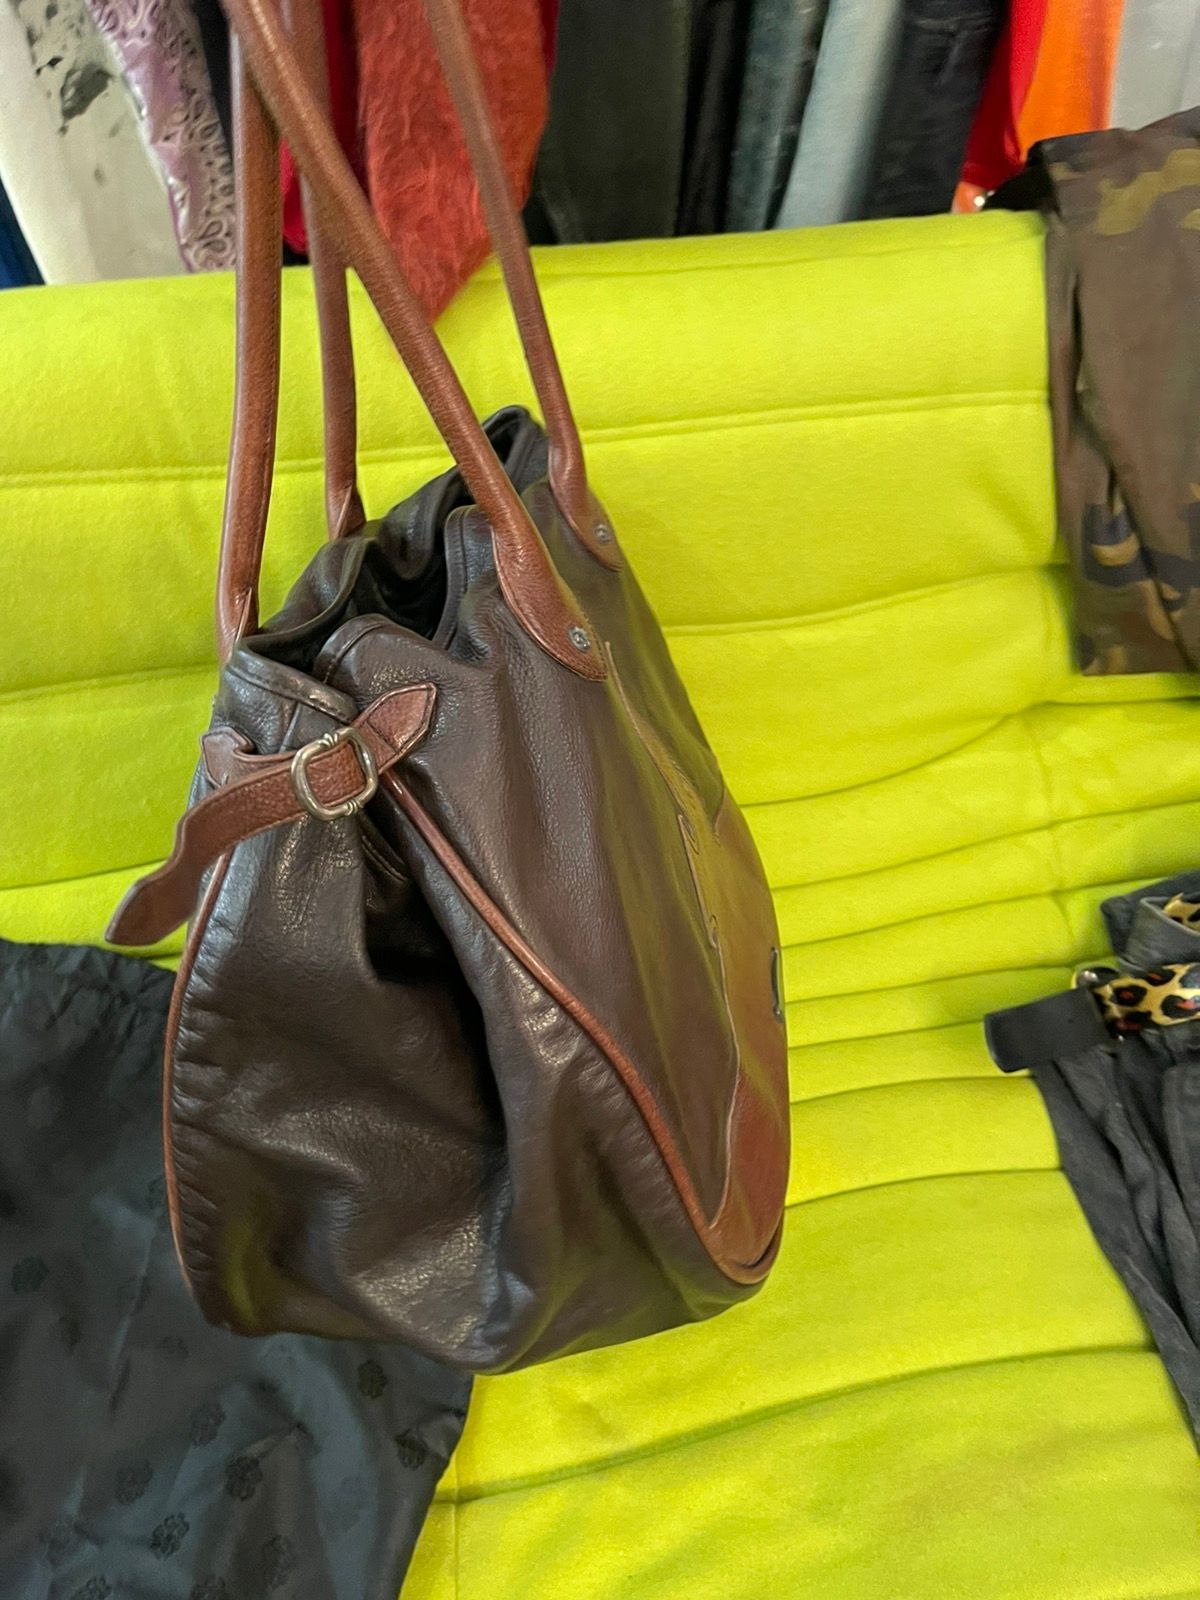 Chrome Hearts XL HUGE Travel Duffle Vacation Bag Luggage